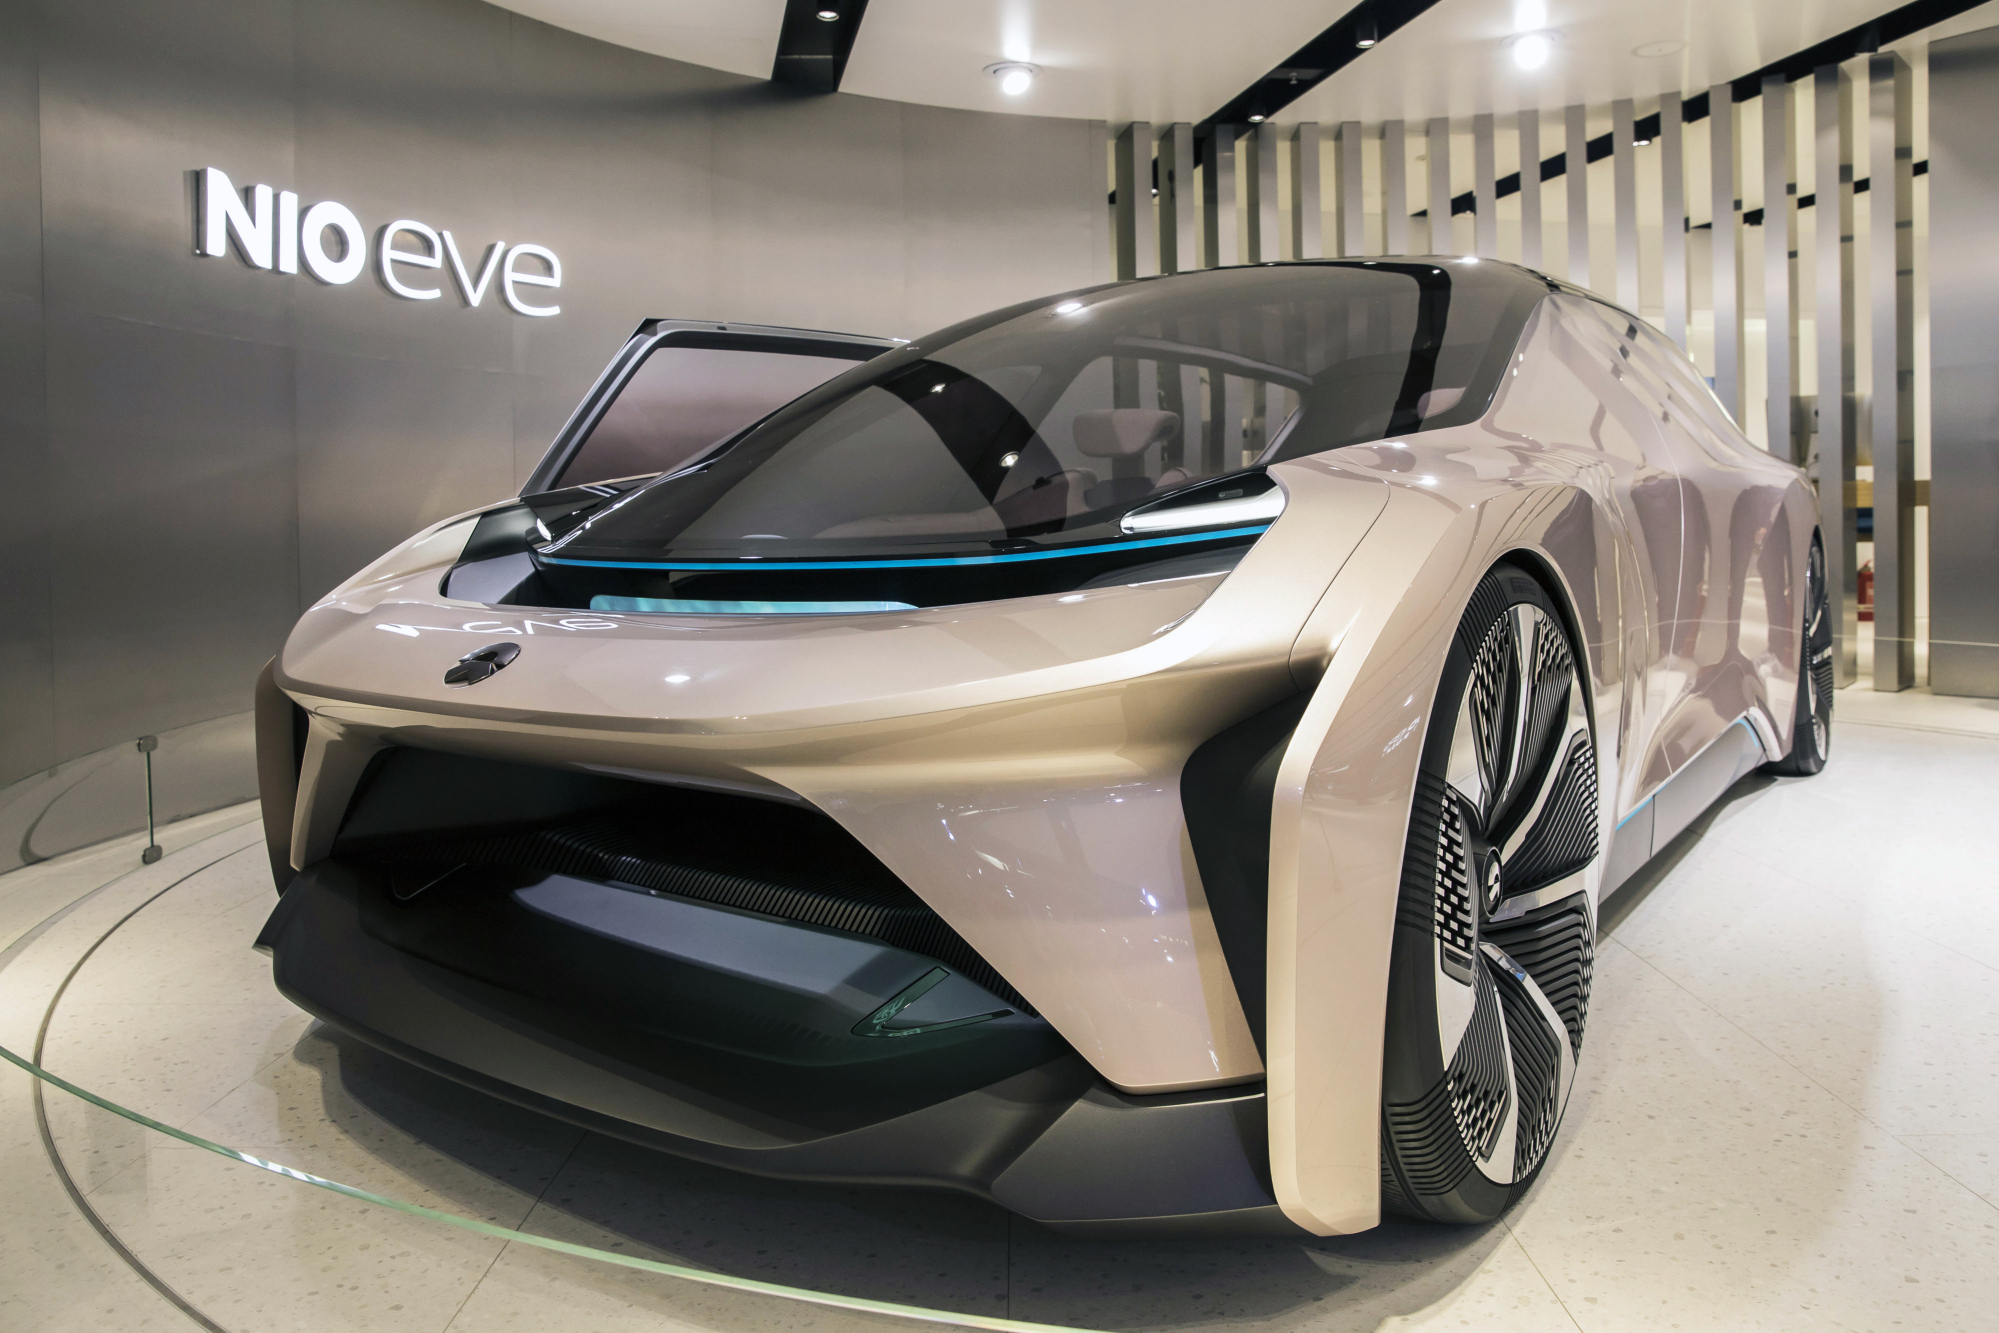 A NIO Eve autonomous concept electric car.